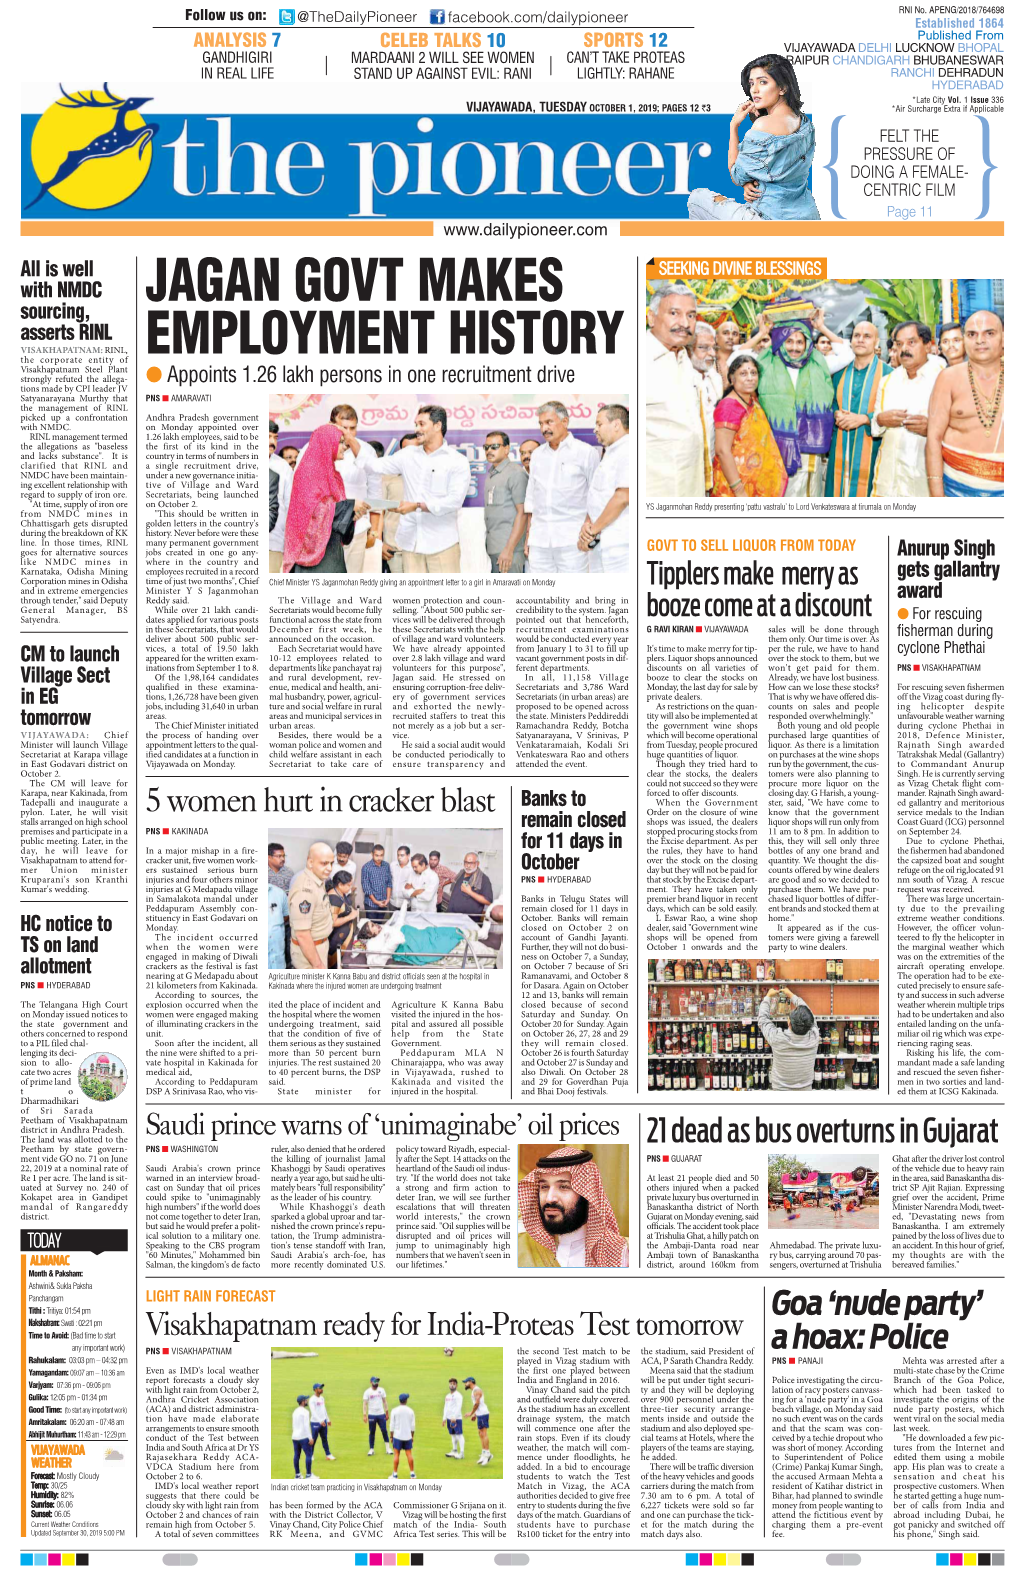 Jagan Govt Makes Employment History